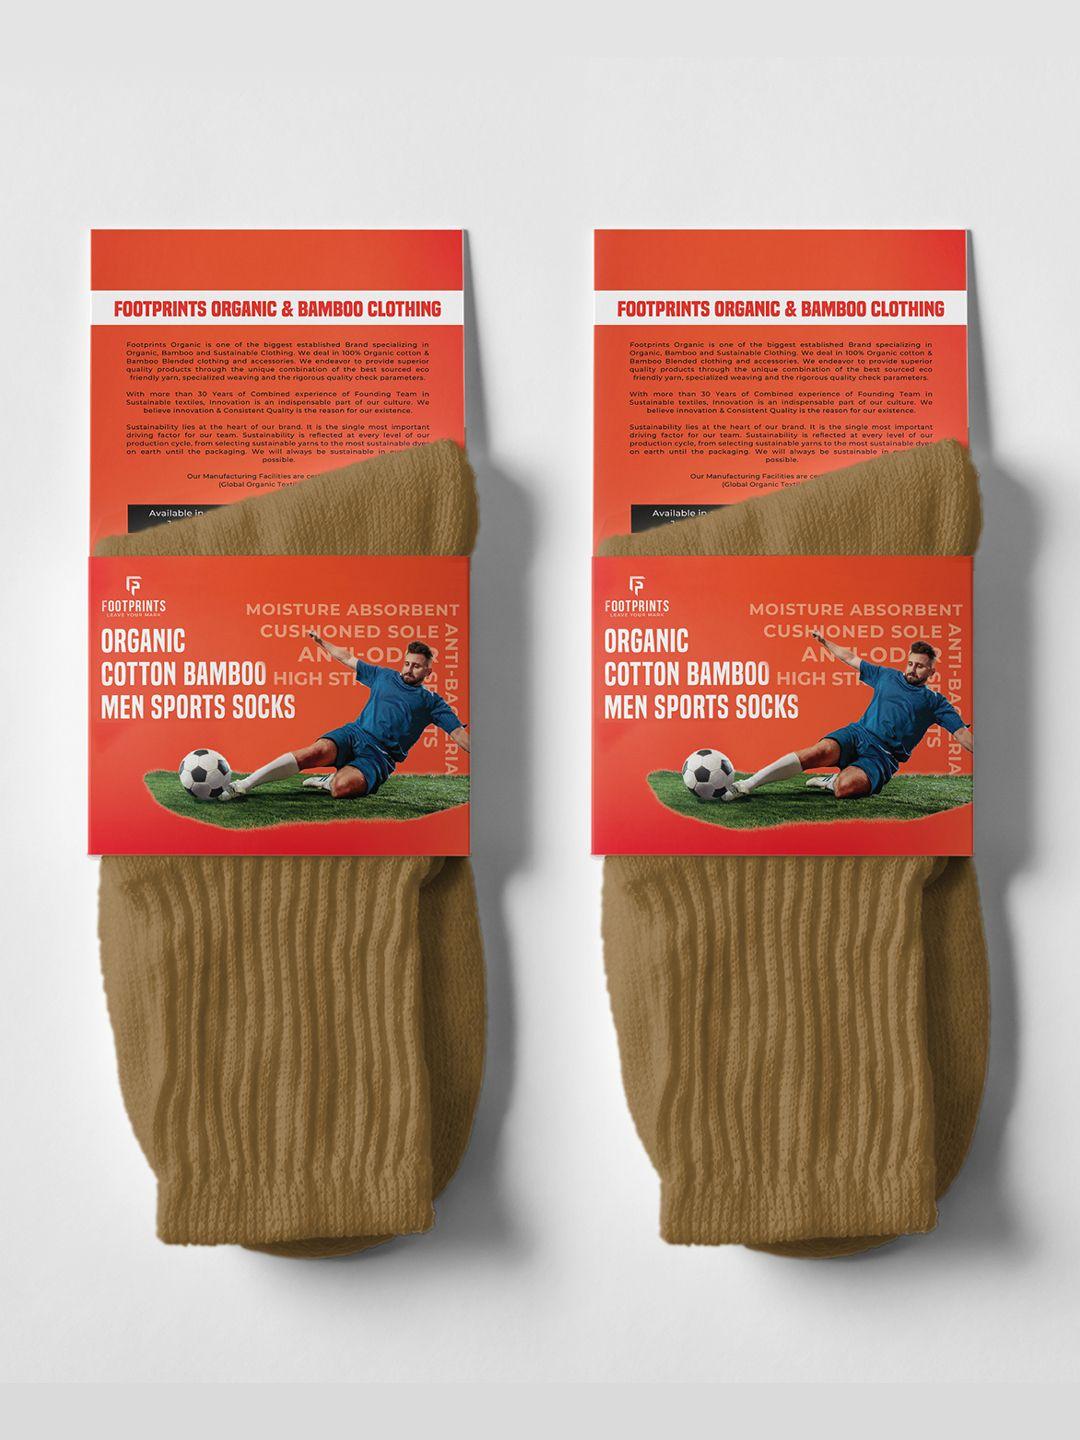 footprints pack of 2 organic cotton & bamboo calf-length socks